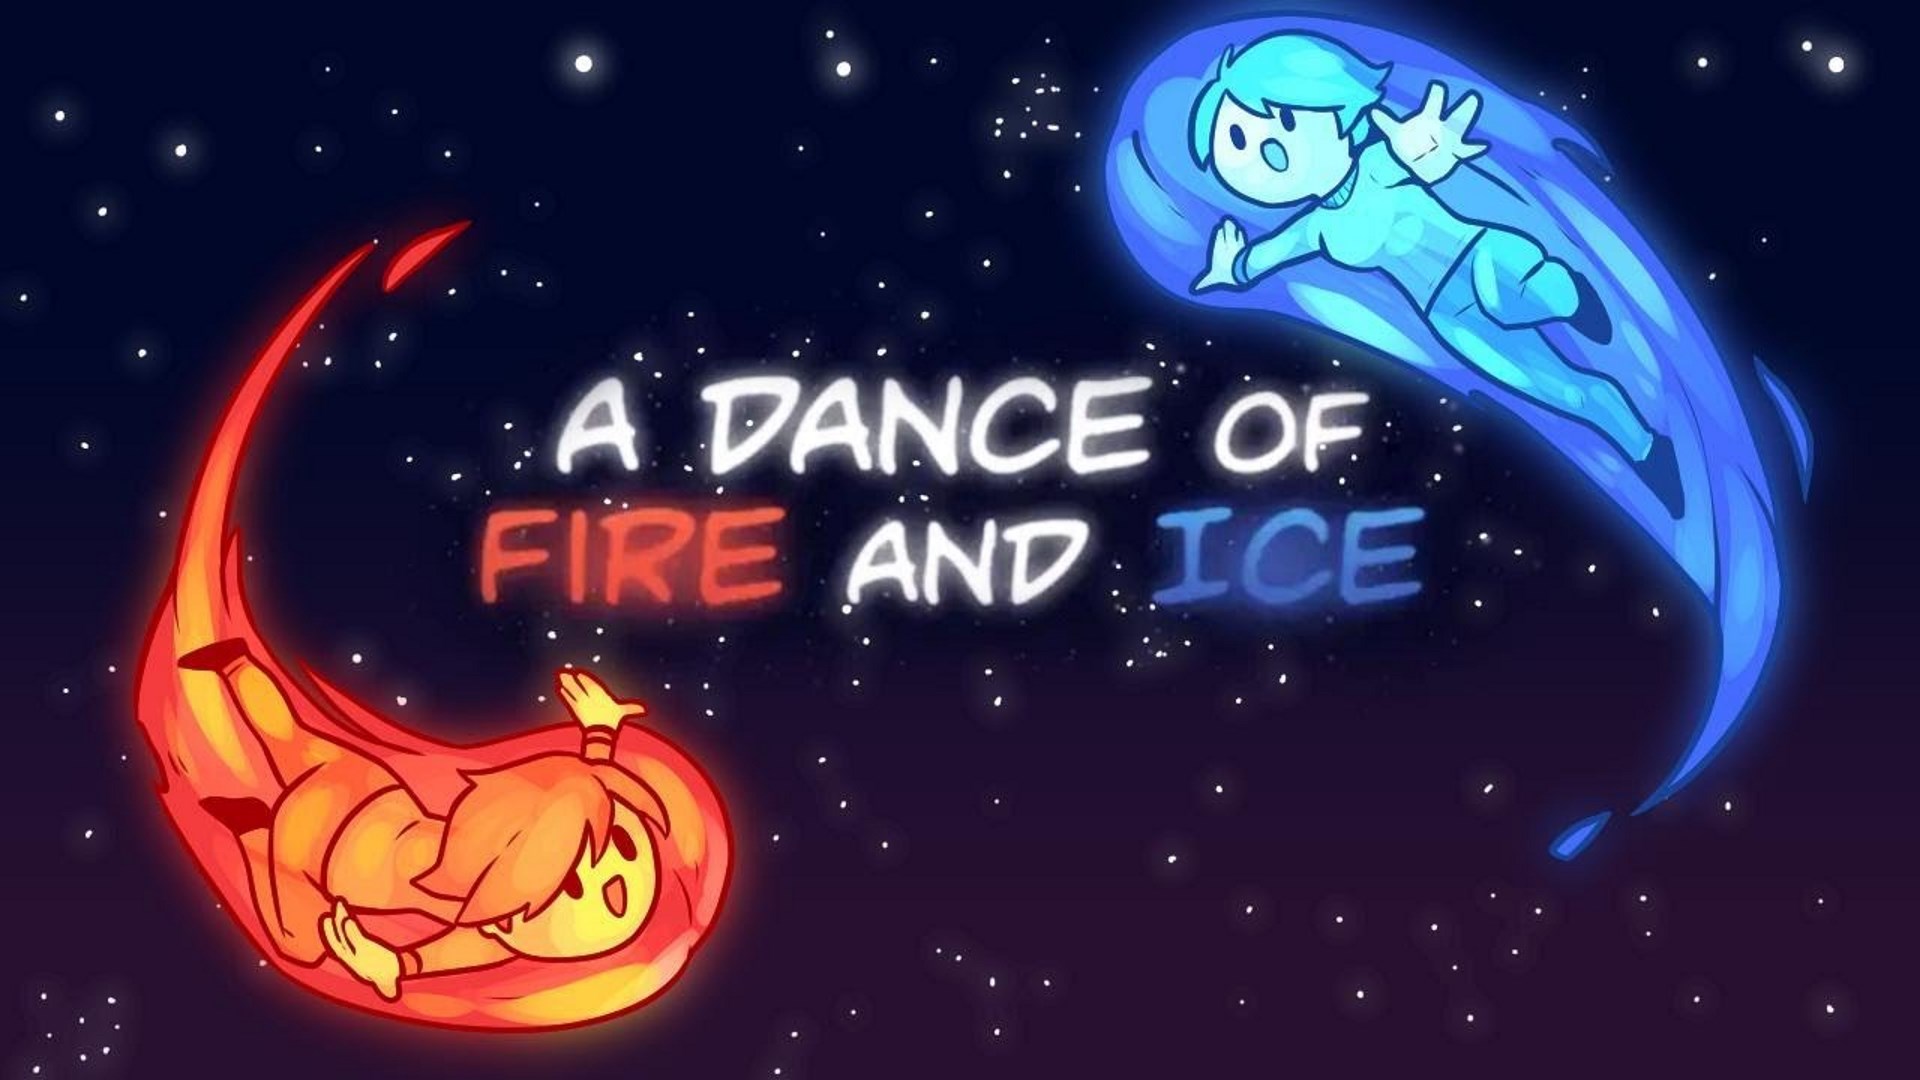 Файер айс. A Dance of Fire and Ice. Fire Dance. ADOFAI A Dance of Fire and Ice. Ice and Fire игра.